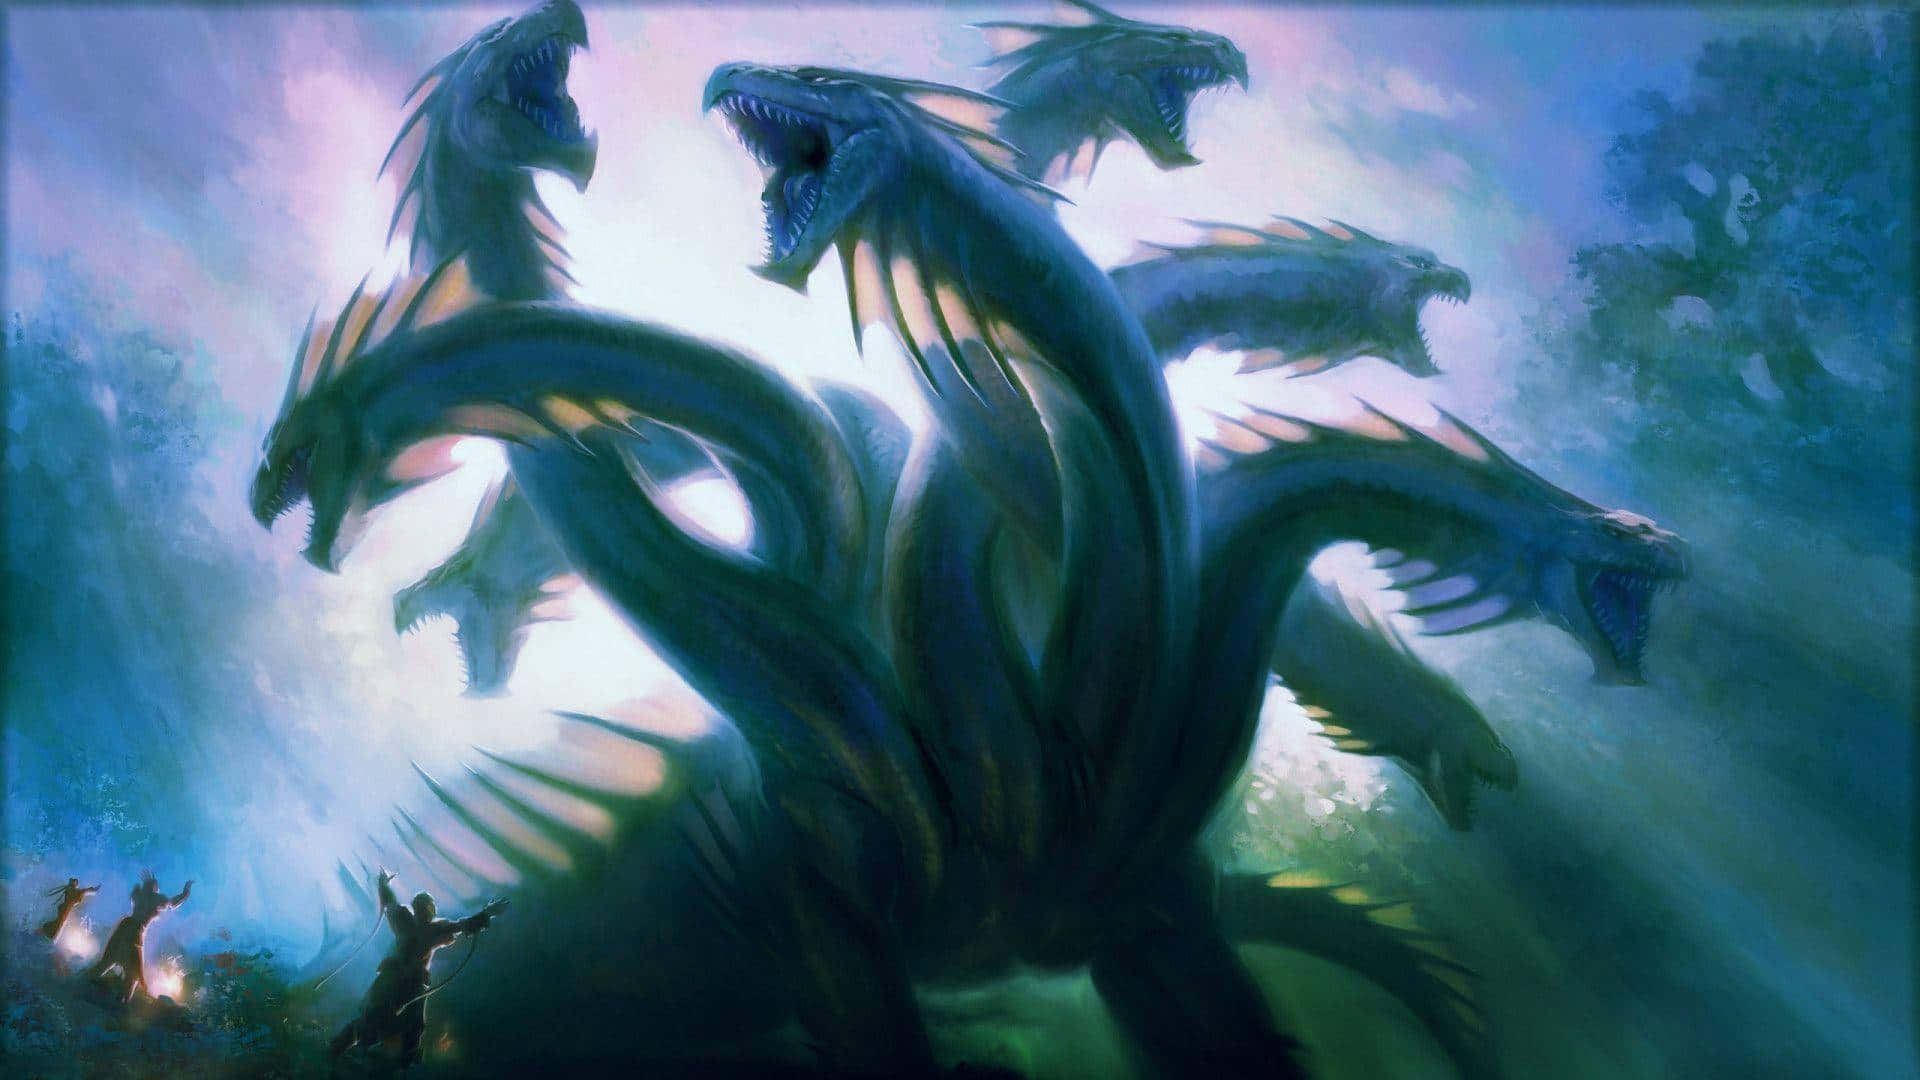 Enter the Fantasy Realm of the Mystical Dragon Wallpaper